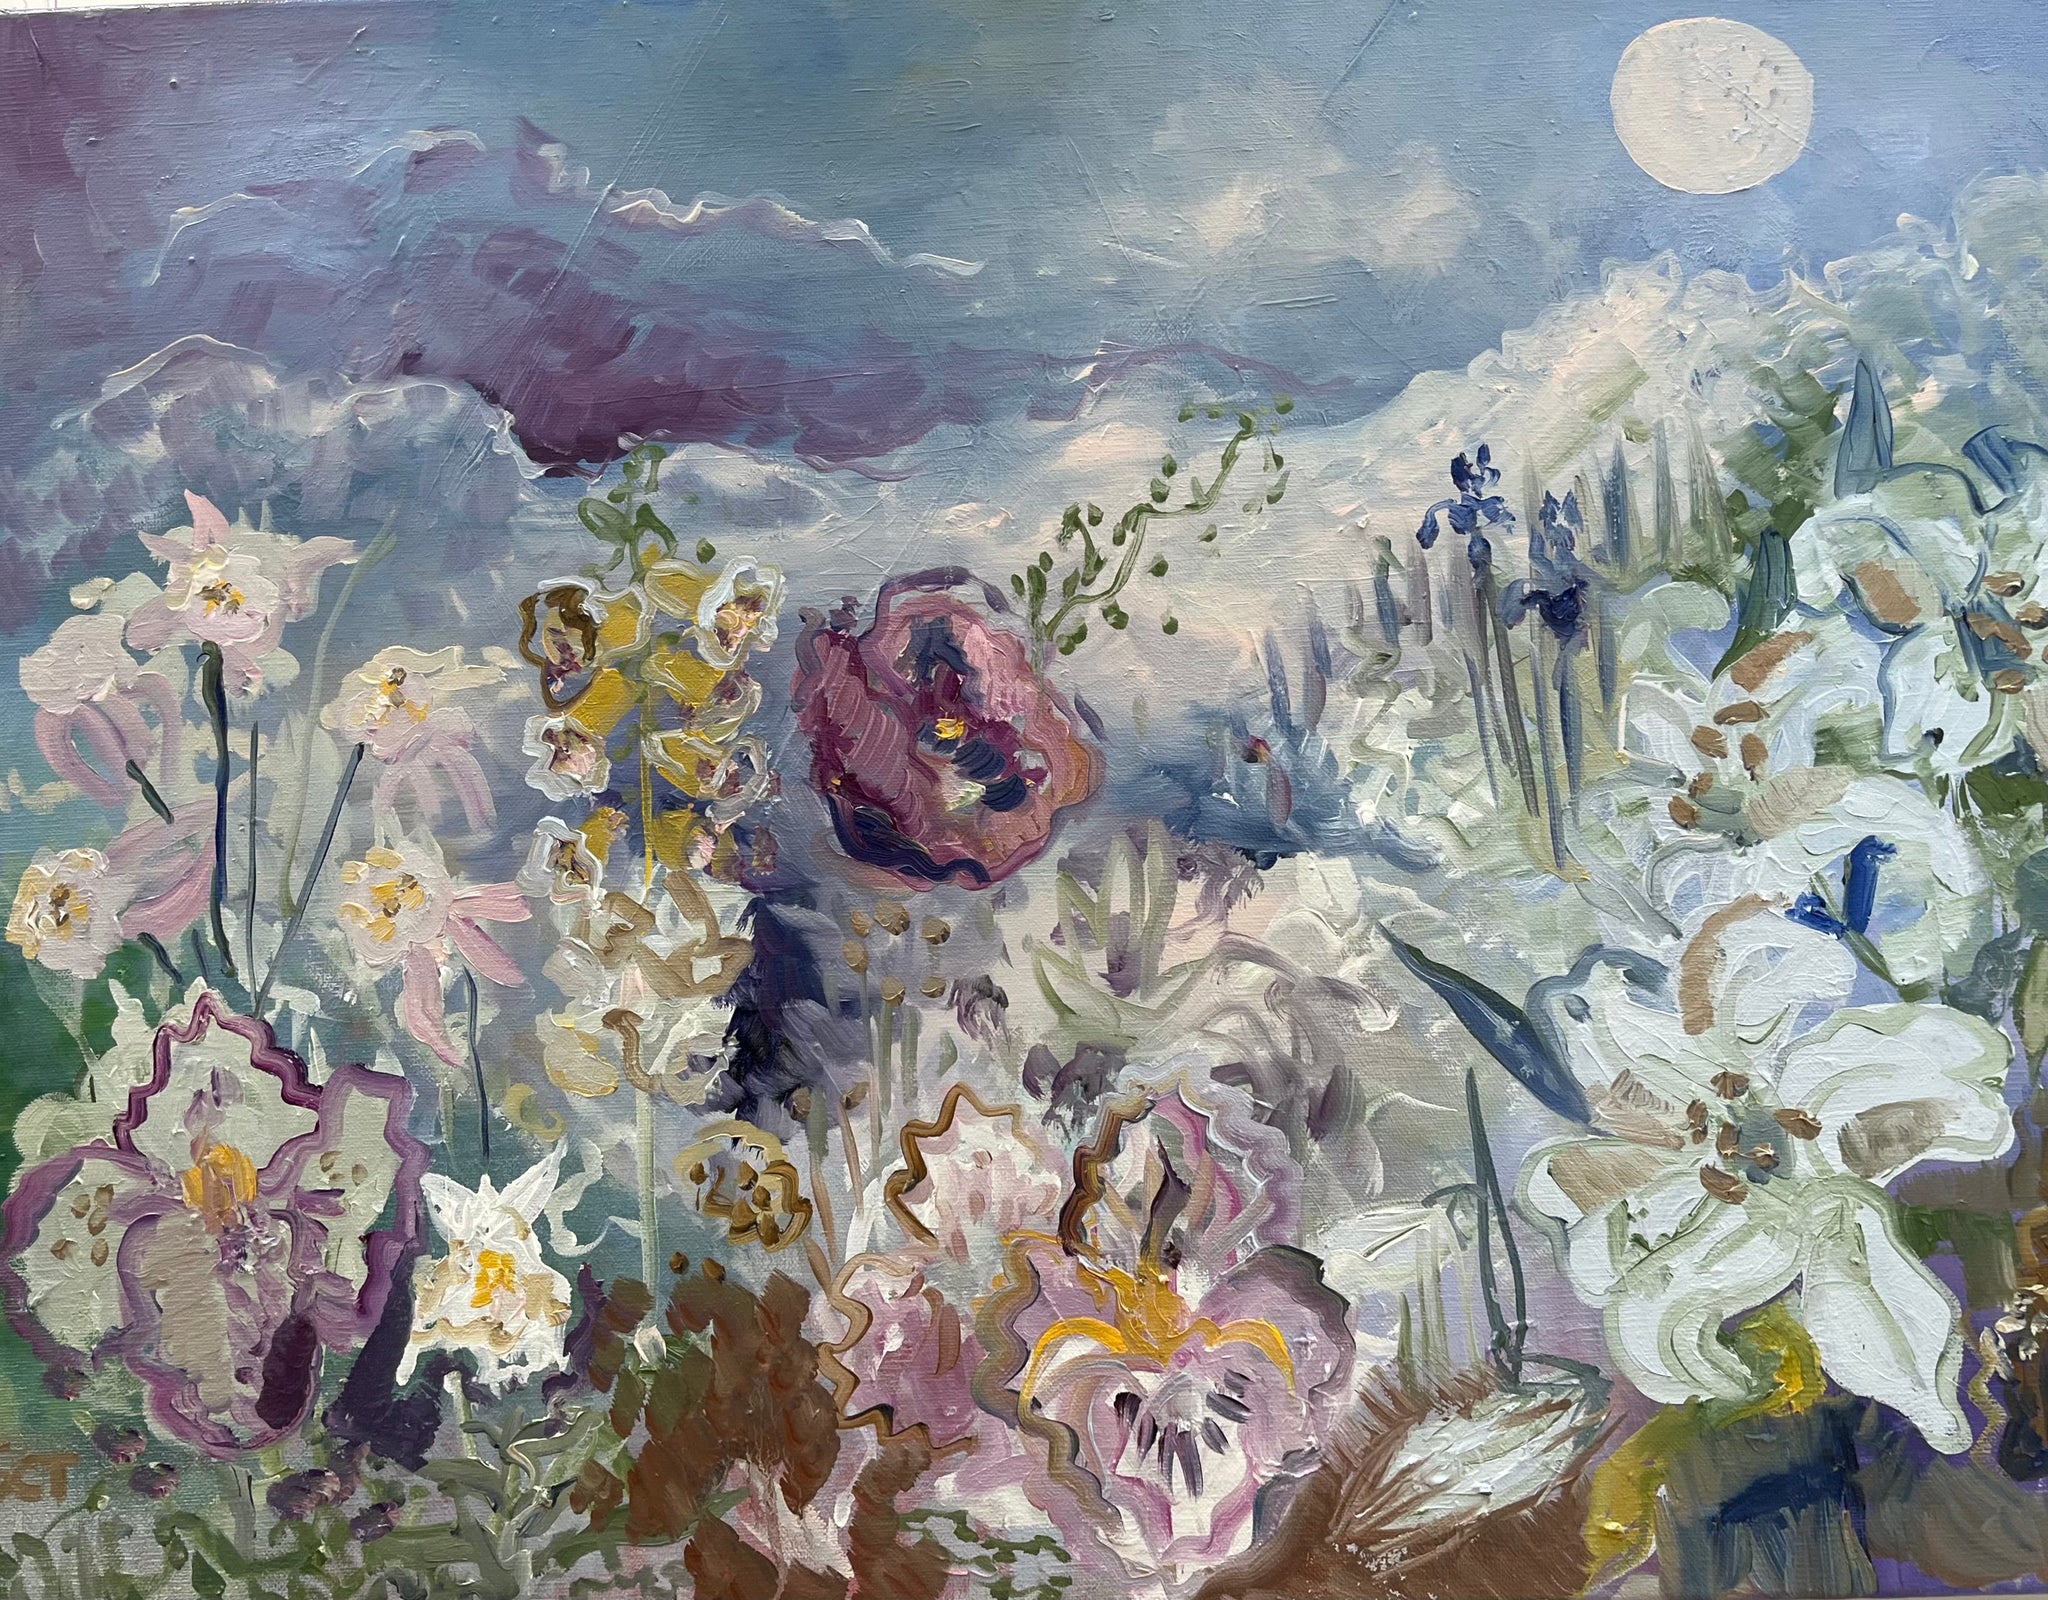 ORIGINAL "Spring Moon Garden" Oil Painting on Canvas